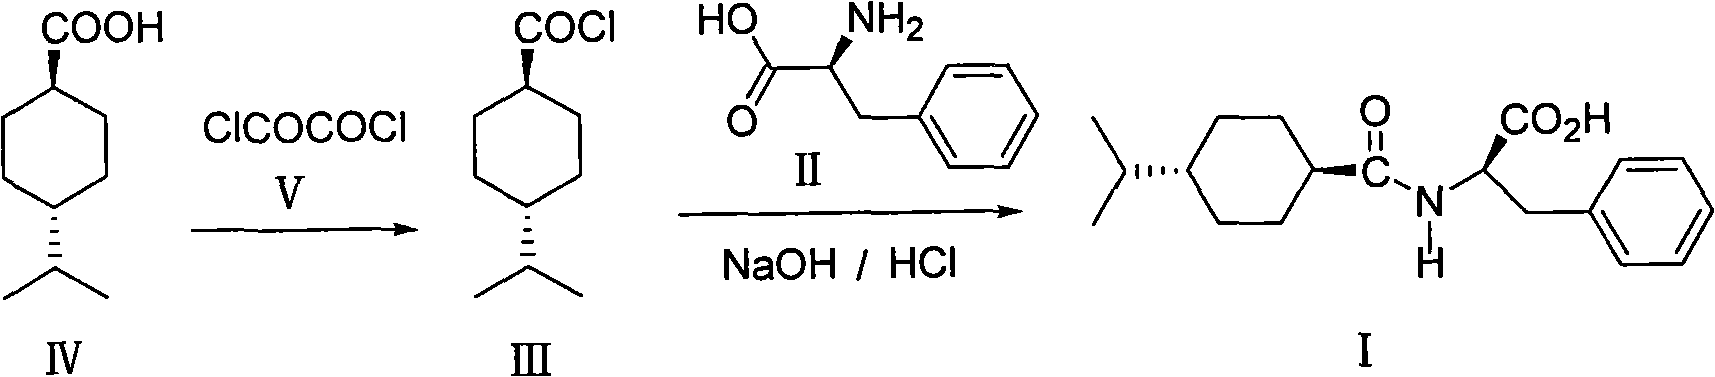 Preparation method of N-(trans-4-isopropylcyclohexyl-1-formyl)-D-phenylalanine